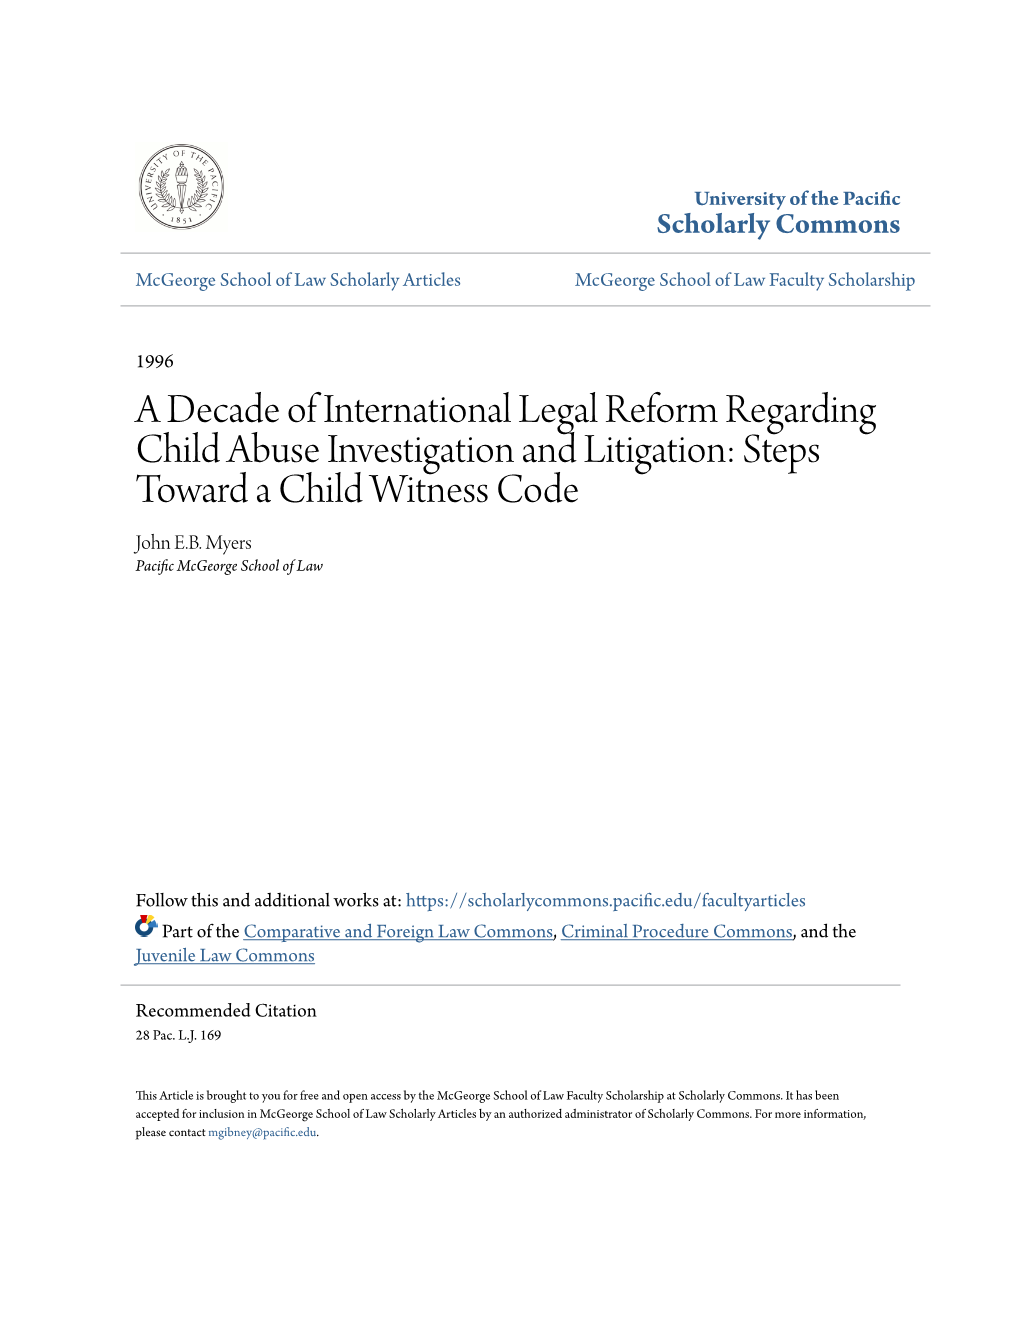 A Decade of International Legal Reform Regarding Child Abuse Investigation and Litigation: Steps Toward a Child Witness Code John E.B